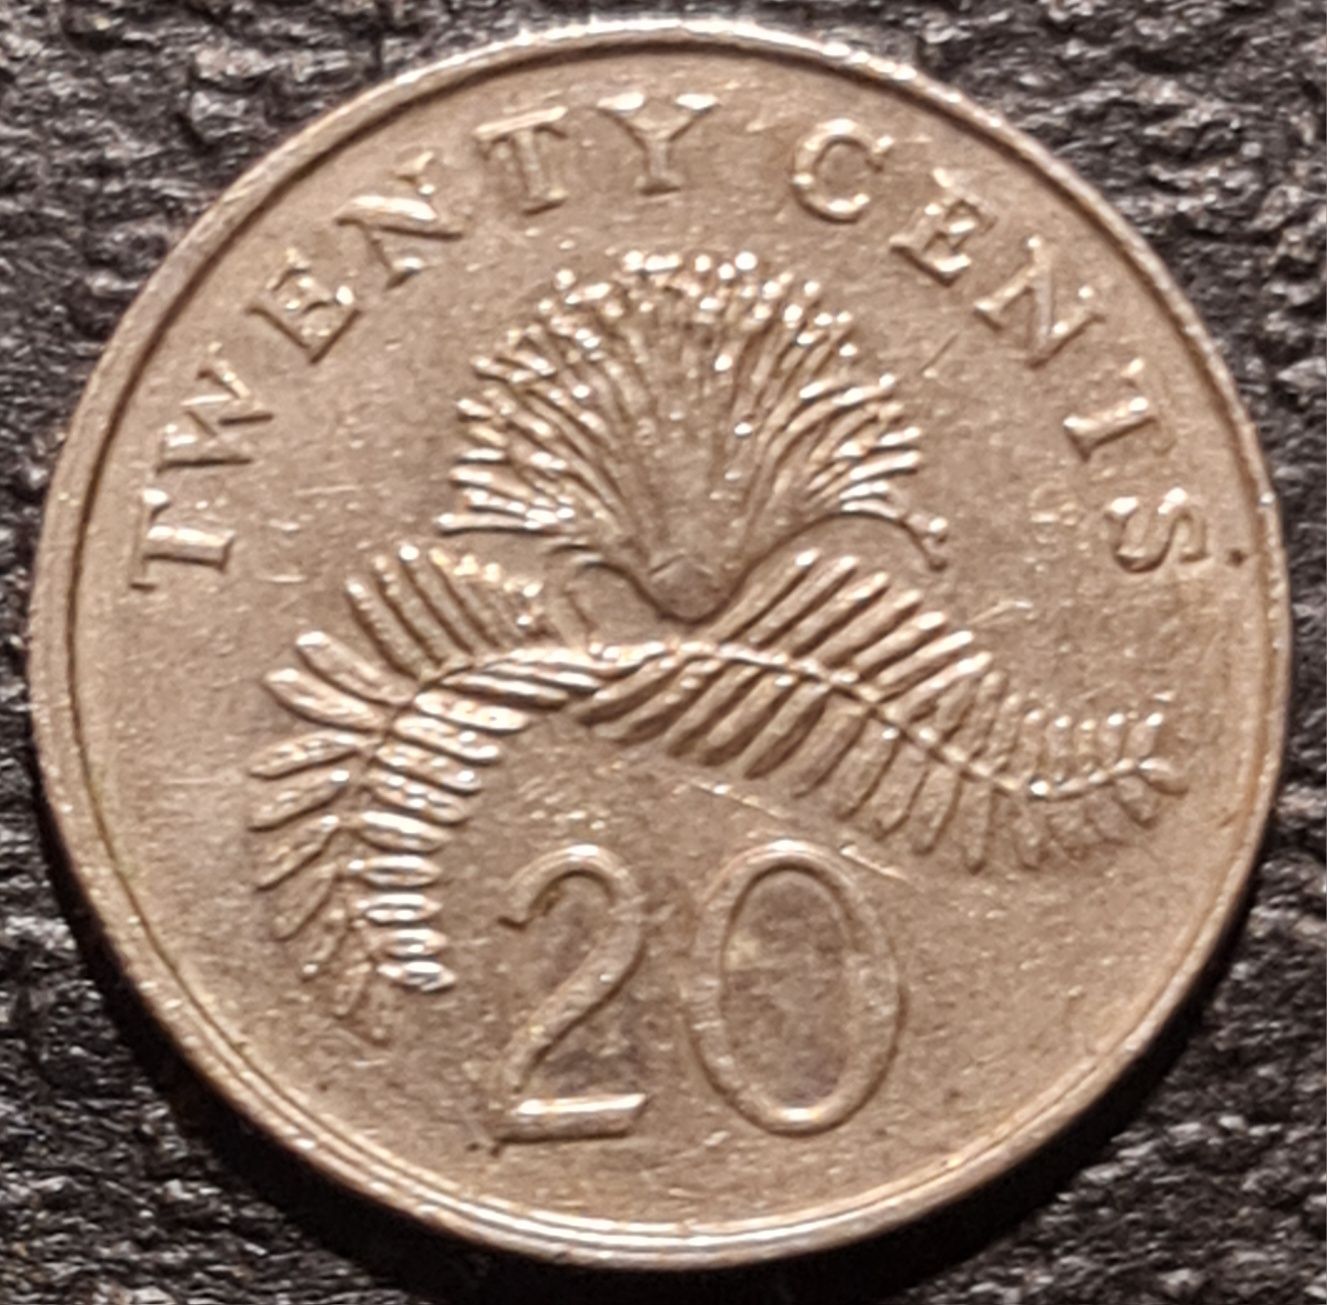 Monede Malaezia si Singapore. 19 buc.